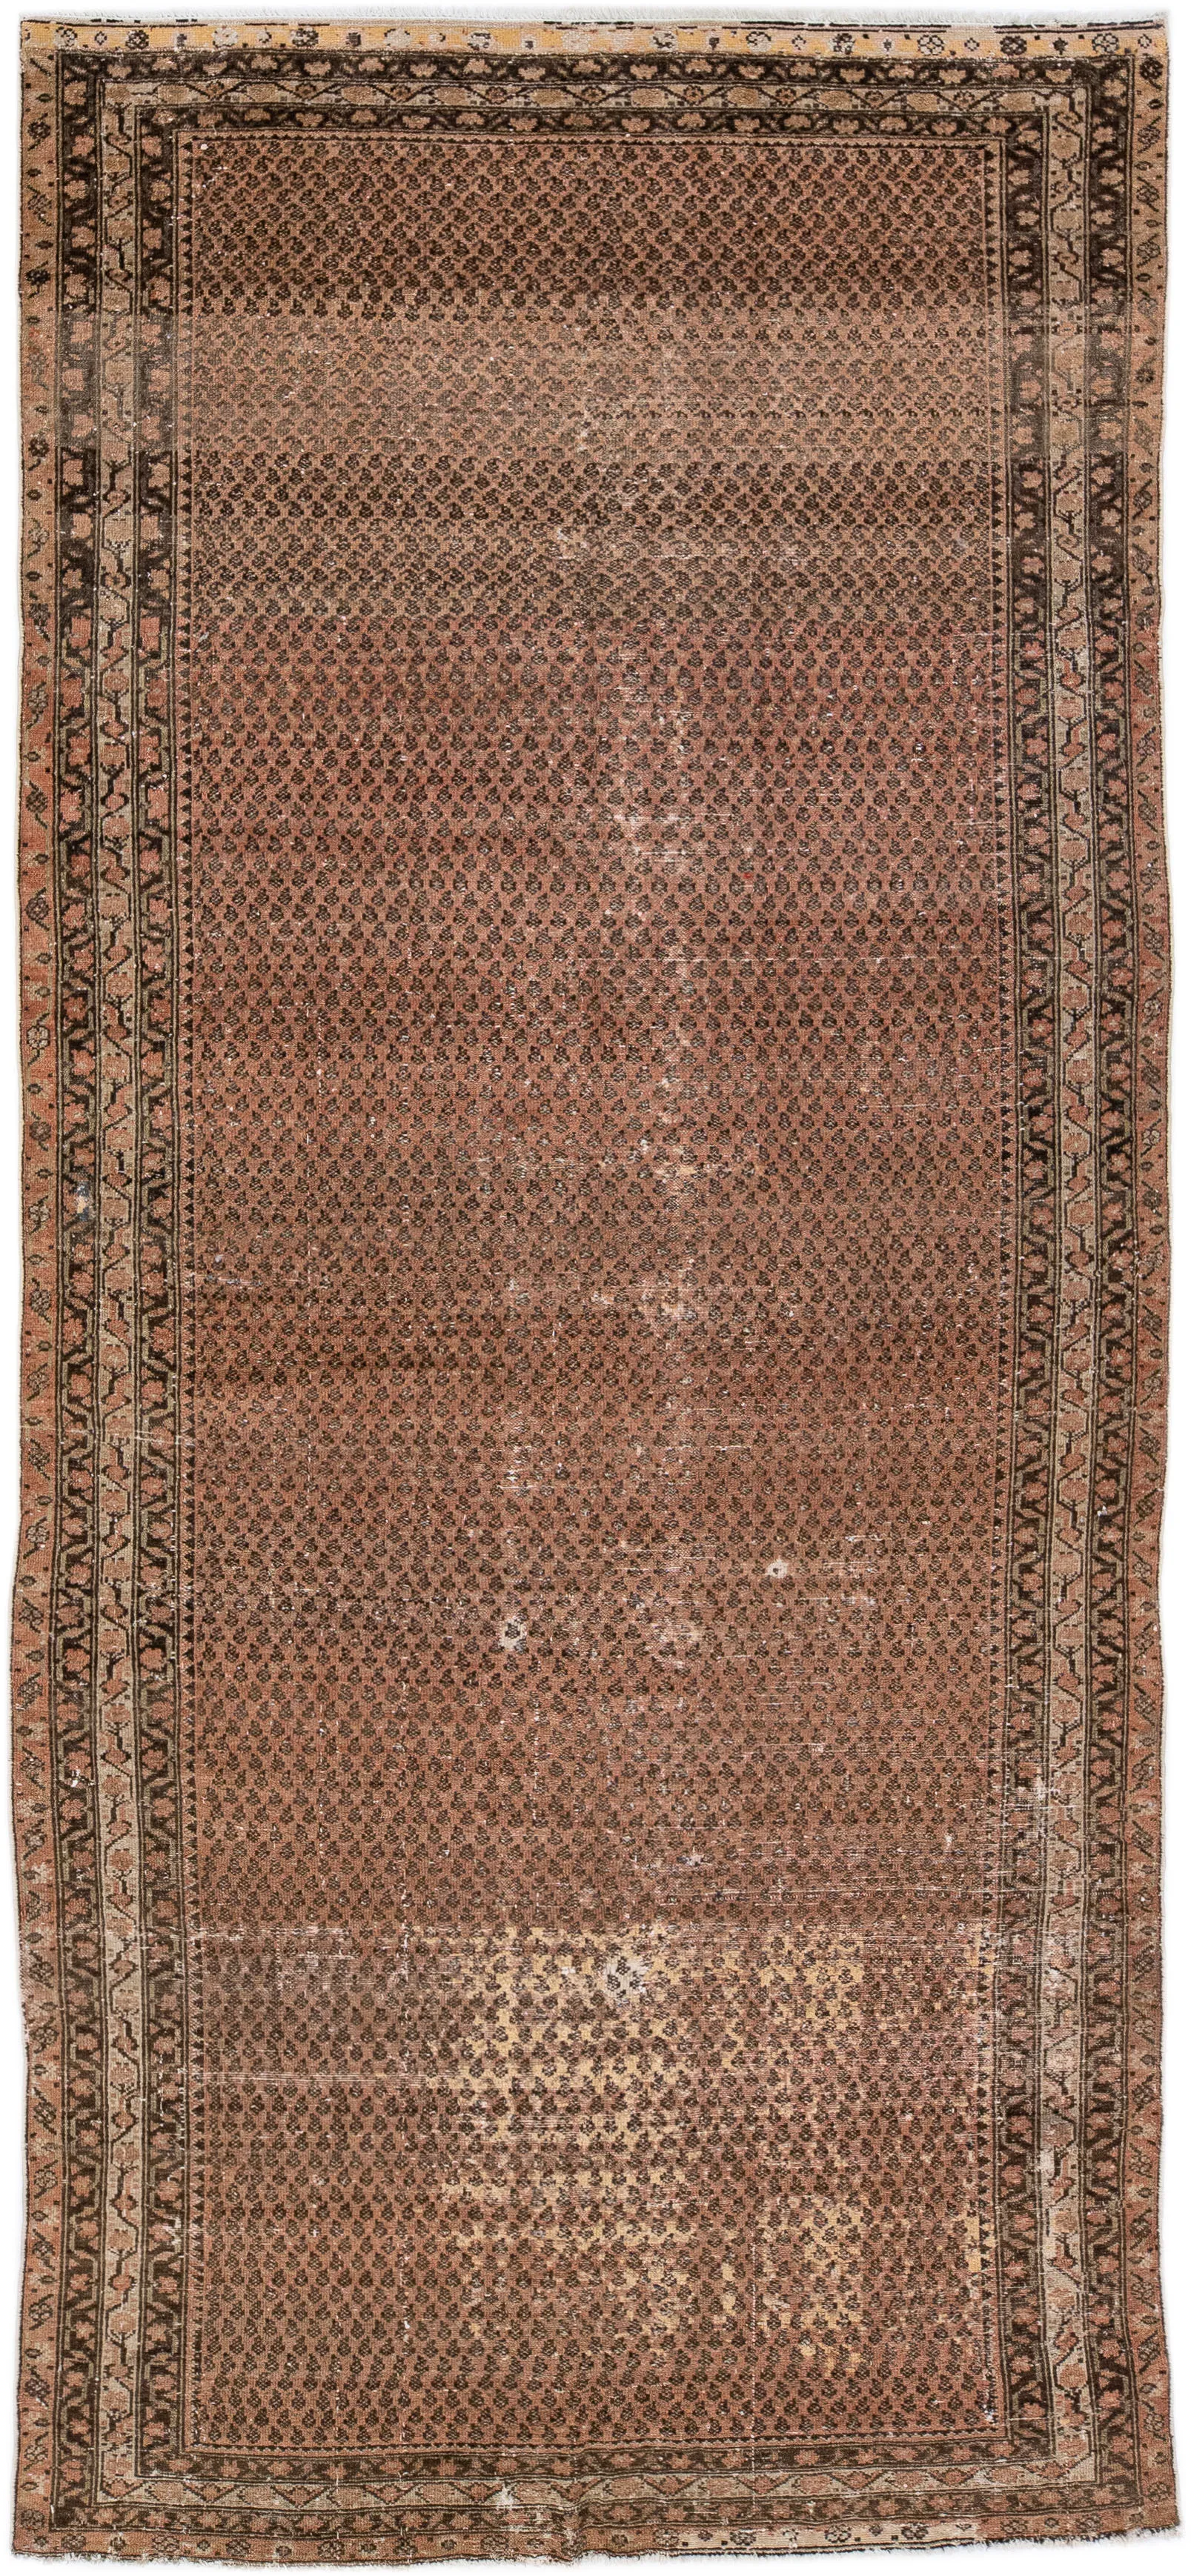 Antique Persian Malayer Runner Rug - Apadana - Brown - Brown